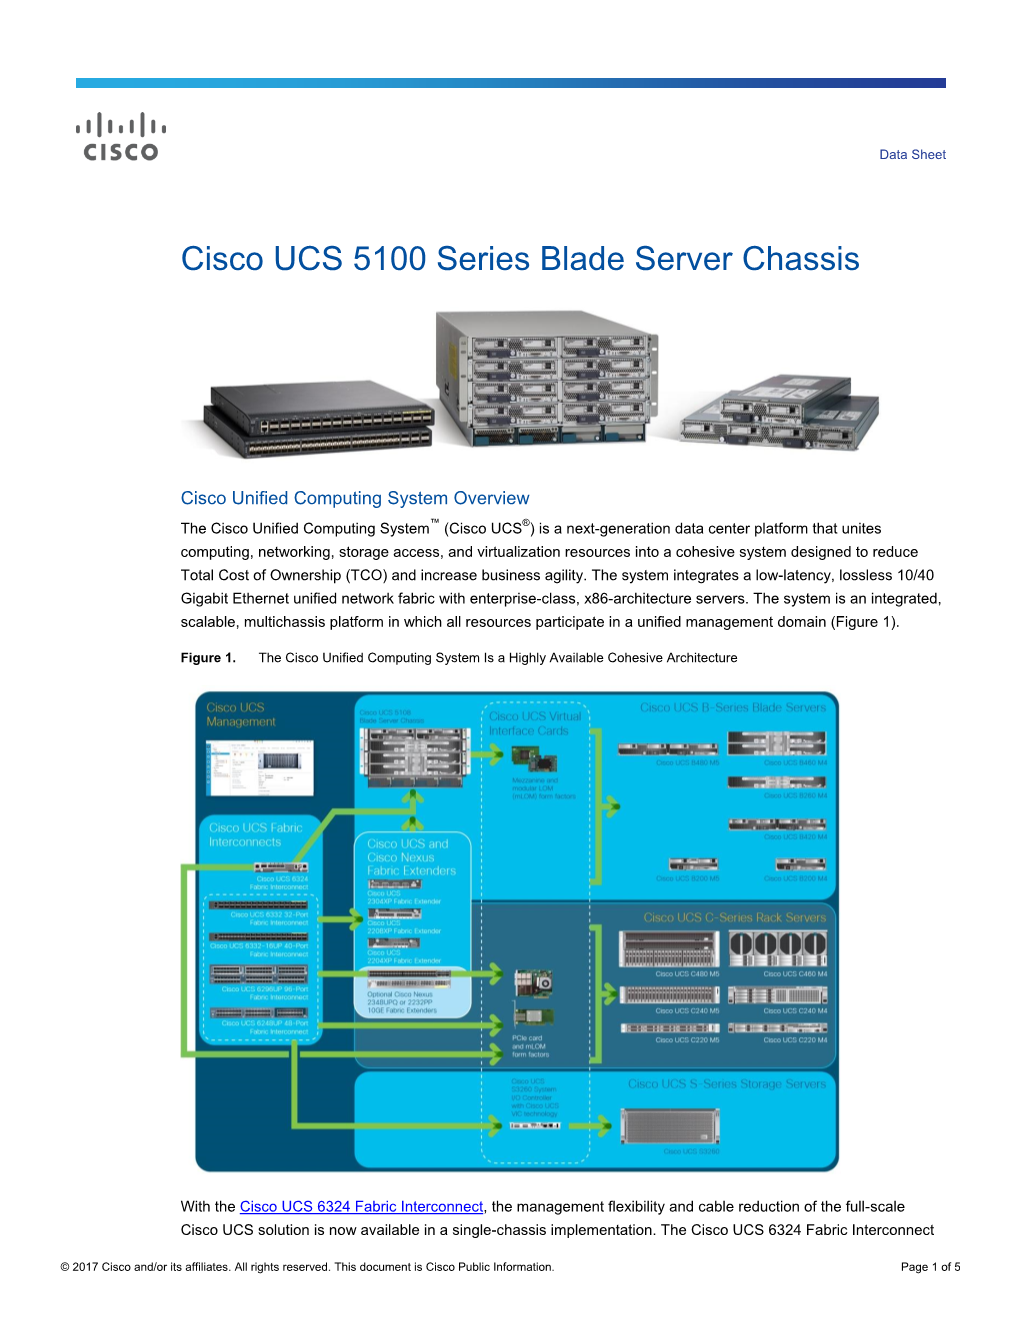 Cisco UCS 5100 Series Blade Server Chassis Data Sheet